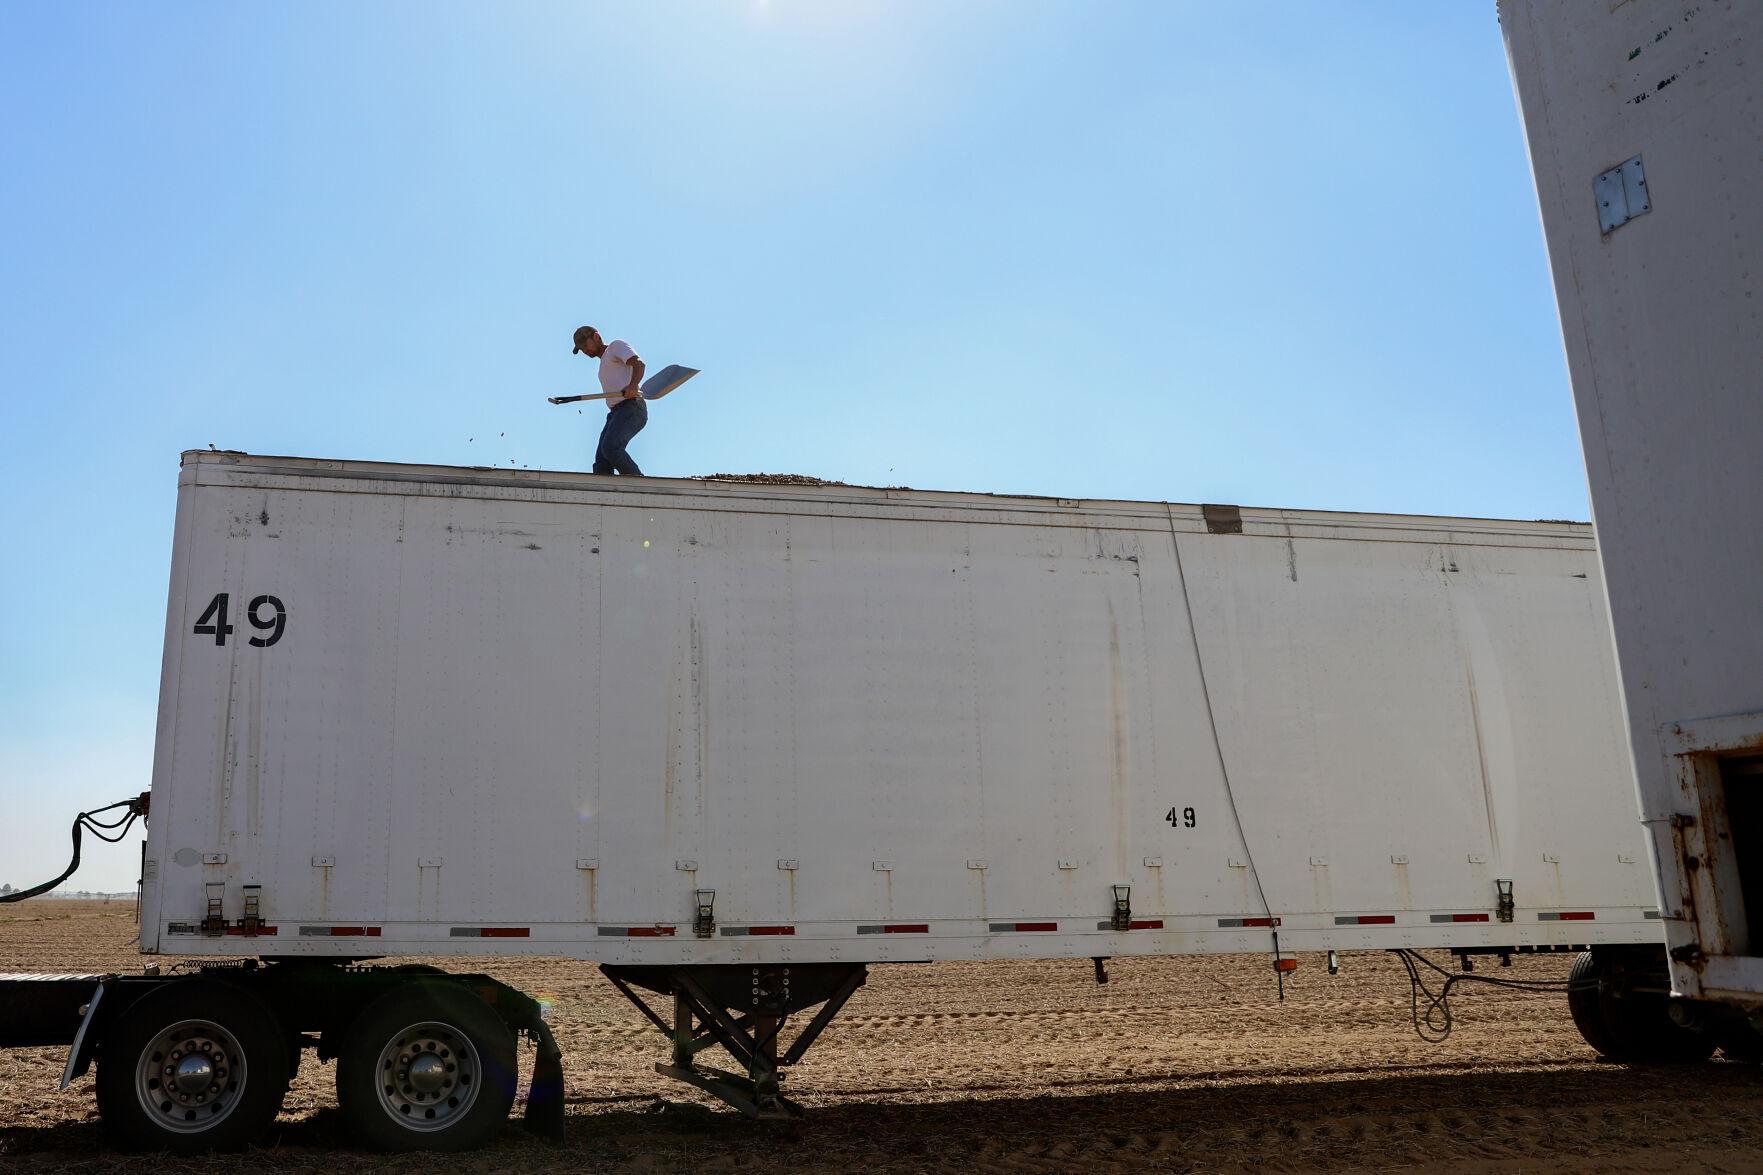 Singles - Matt Deane flattens piles of peanuts in a semi-trailer...